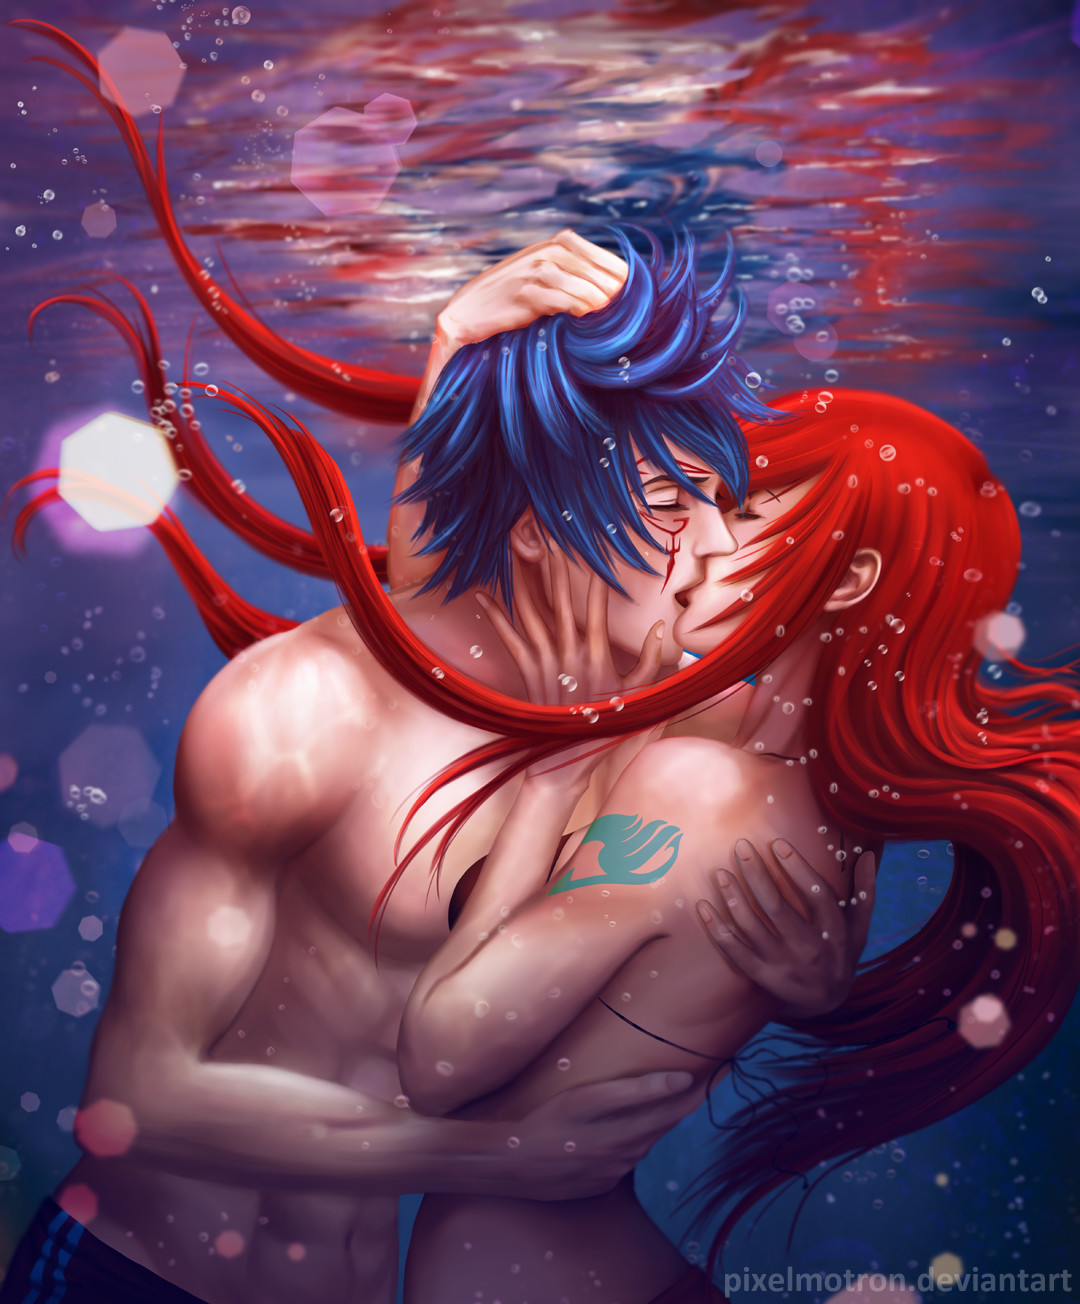 modrawmanga - Jerza underwater kiss